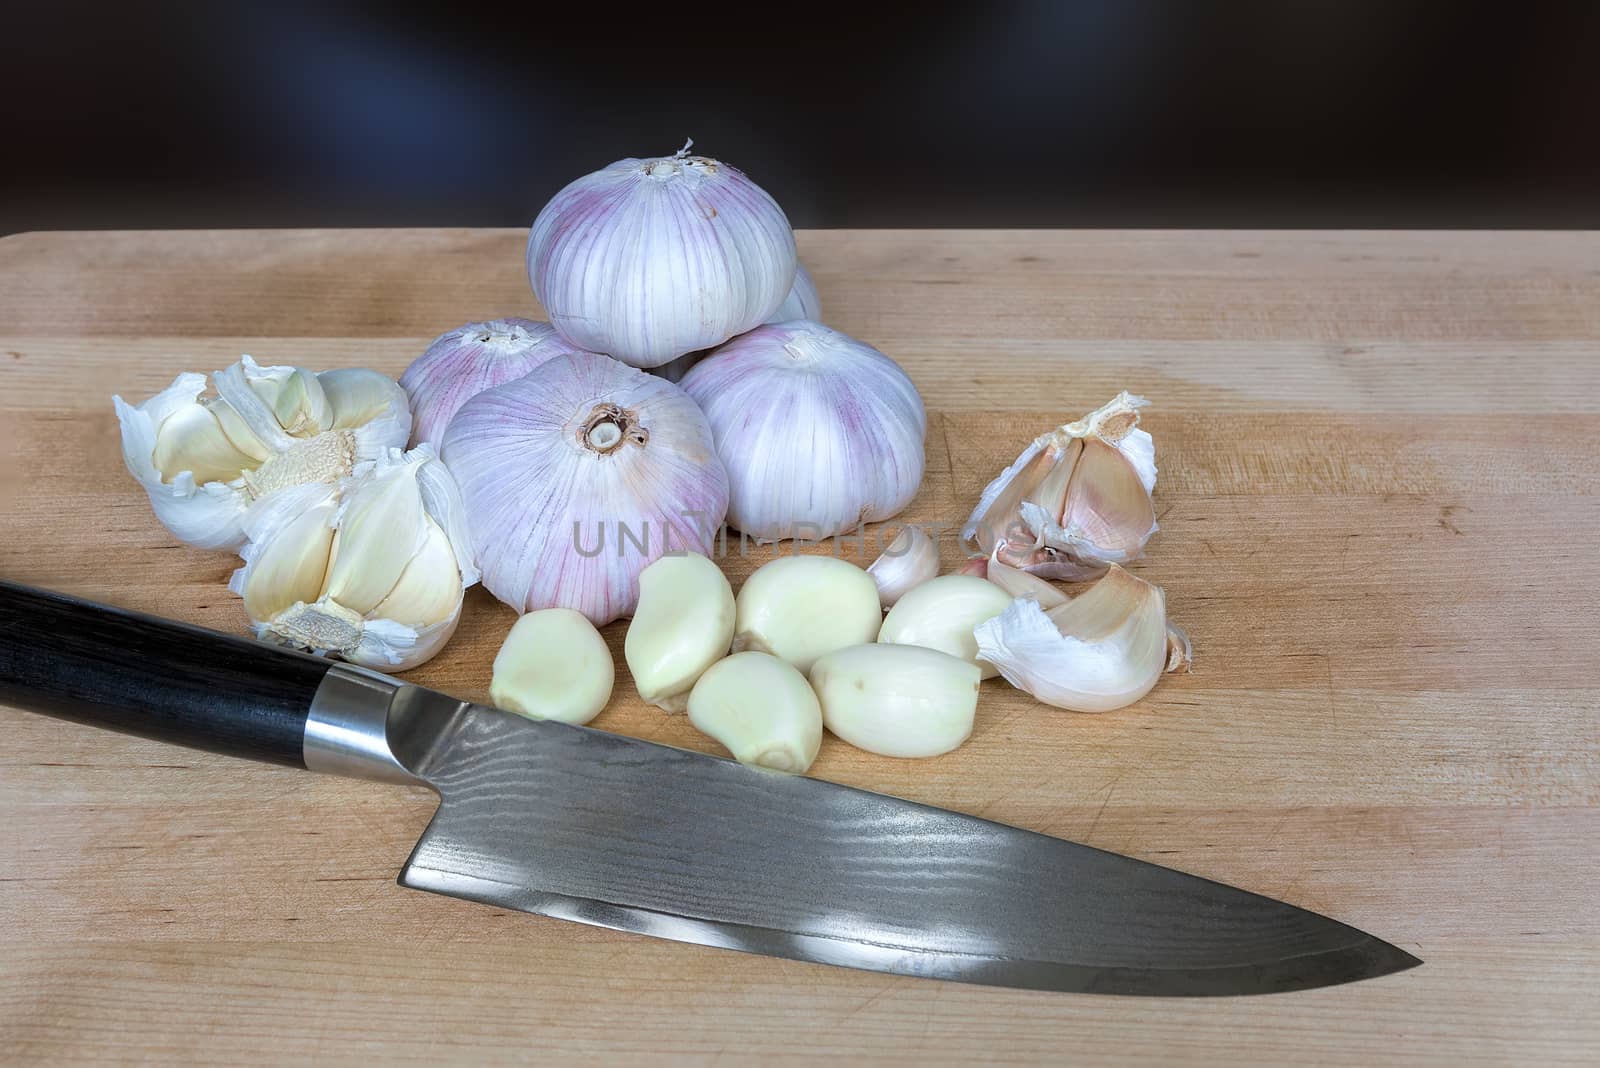 Whole and peeled garlic cloves kitchen knife on kitchen wood cutting board closeup macro